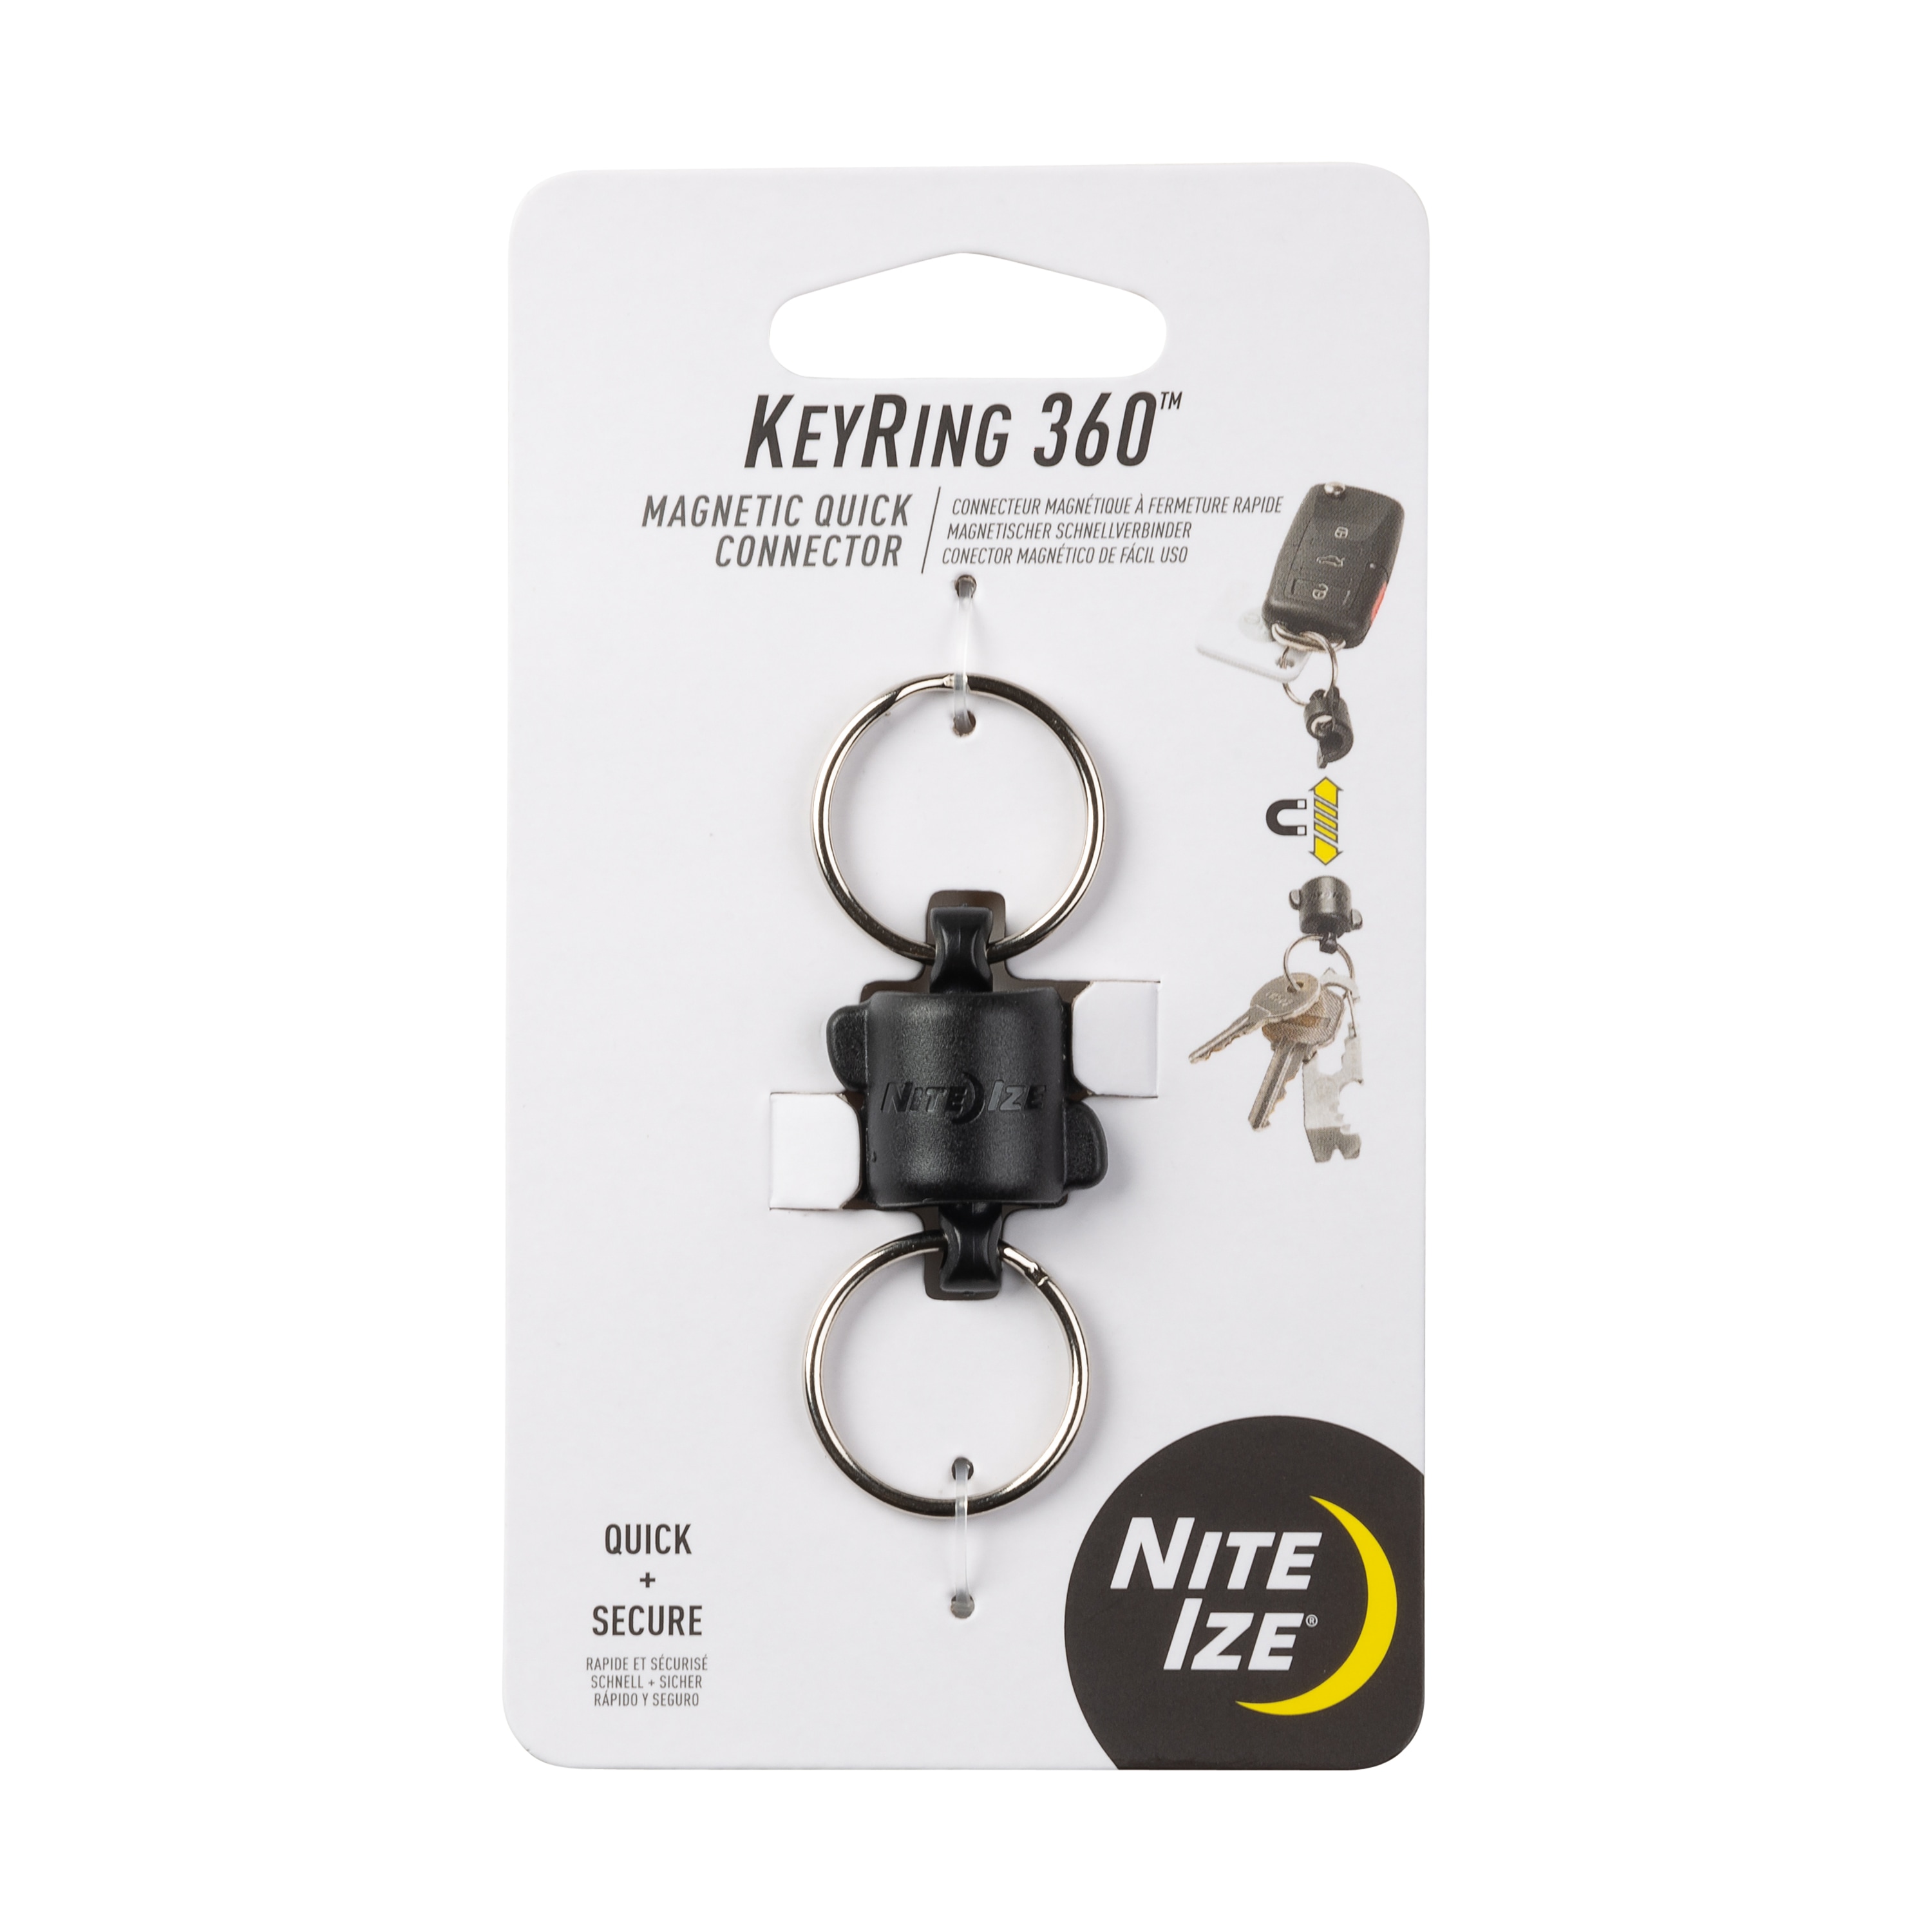 Nite Ize KeyRing 360 Magnetic Quick Connector KR360-01-R3 - The Home Depot